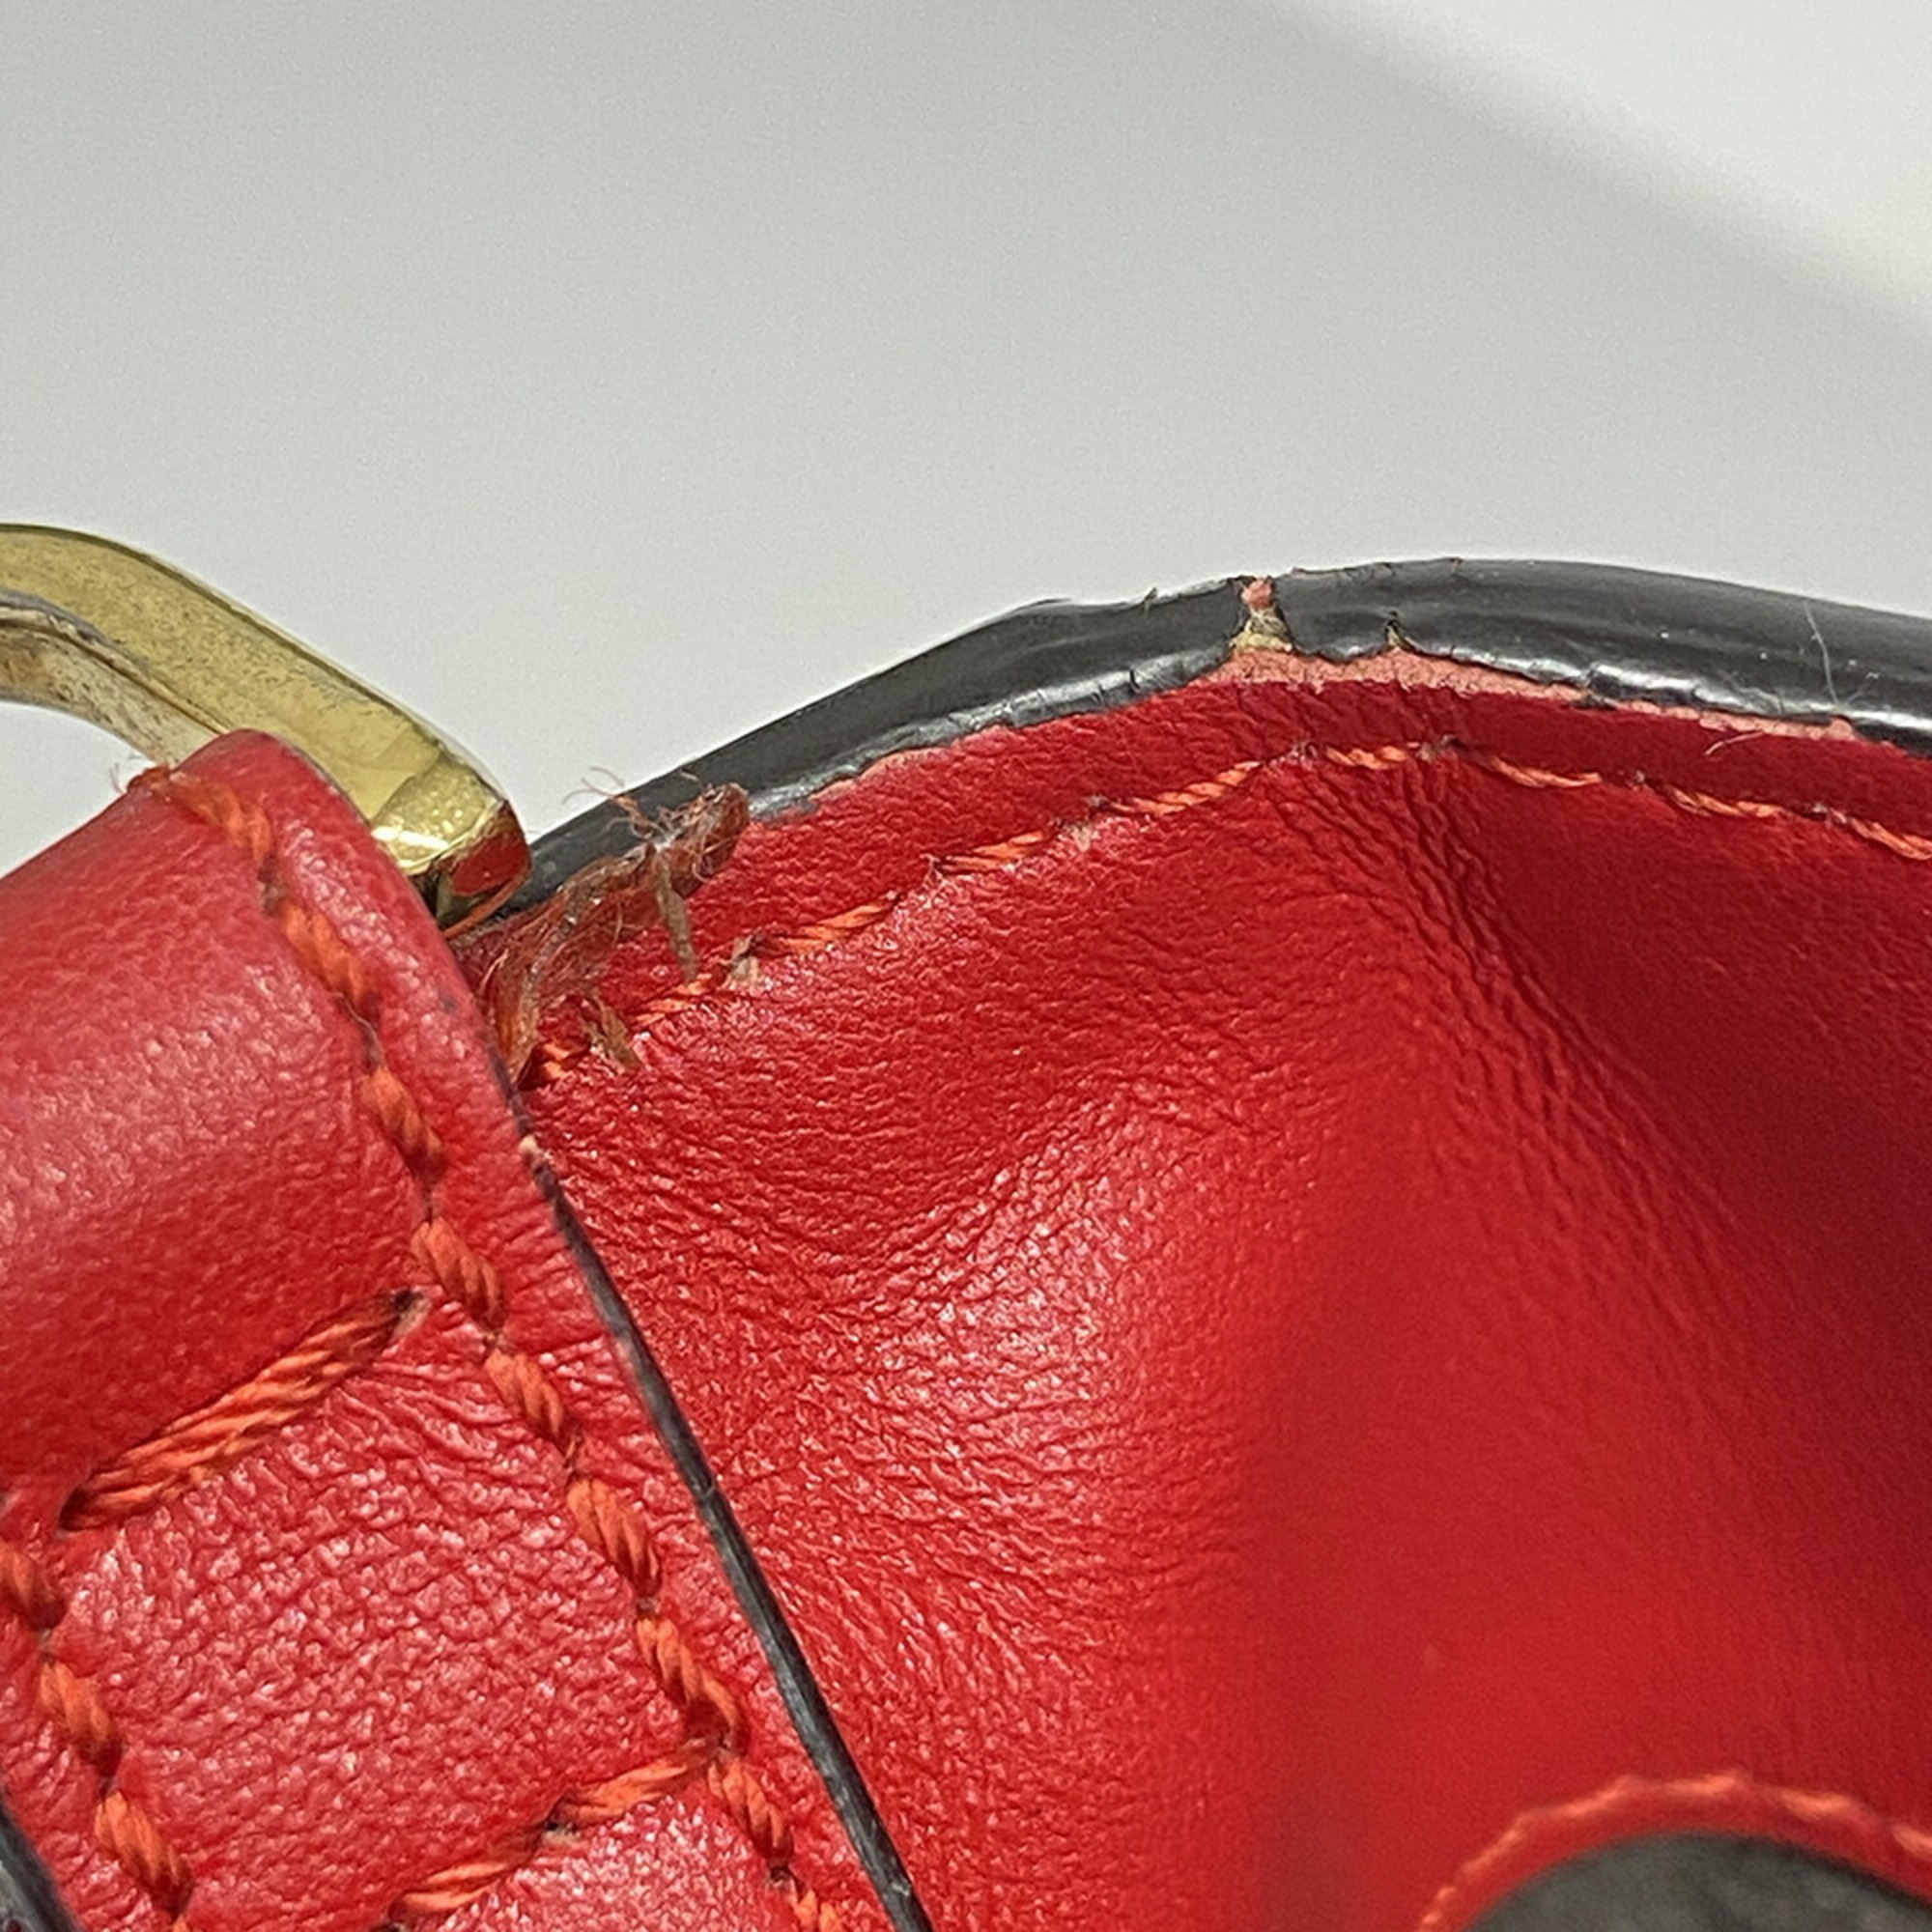 Fendi Handbag FF Tote Leather Red Ladies